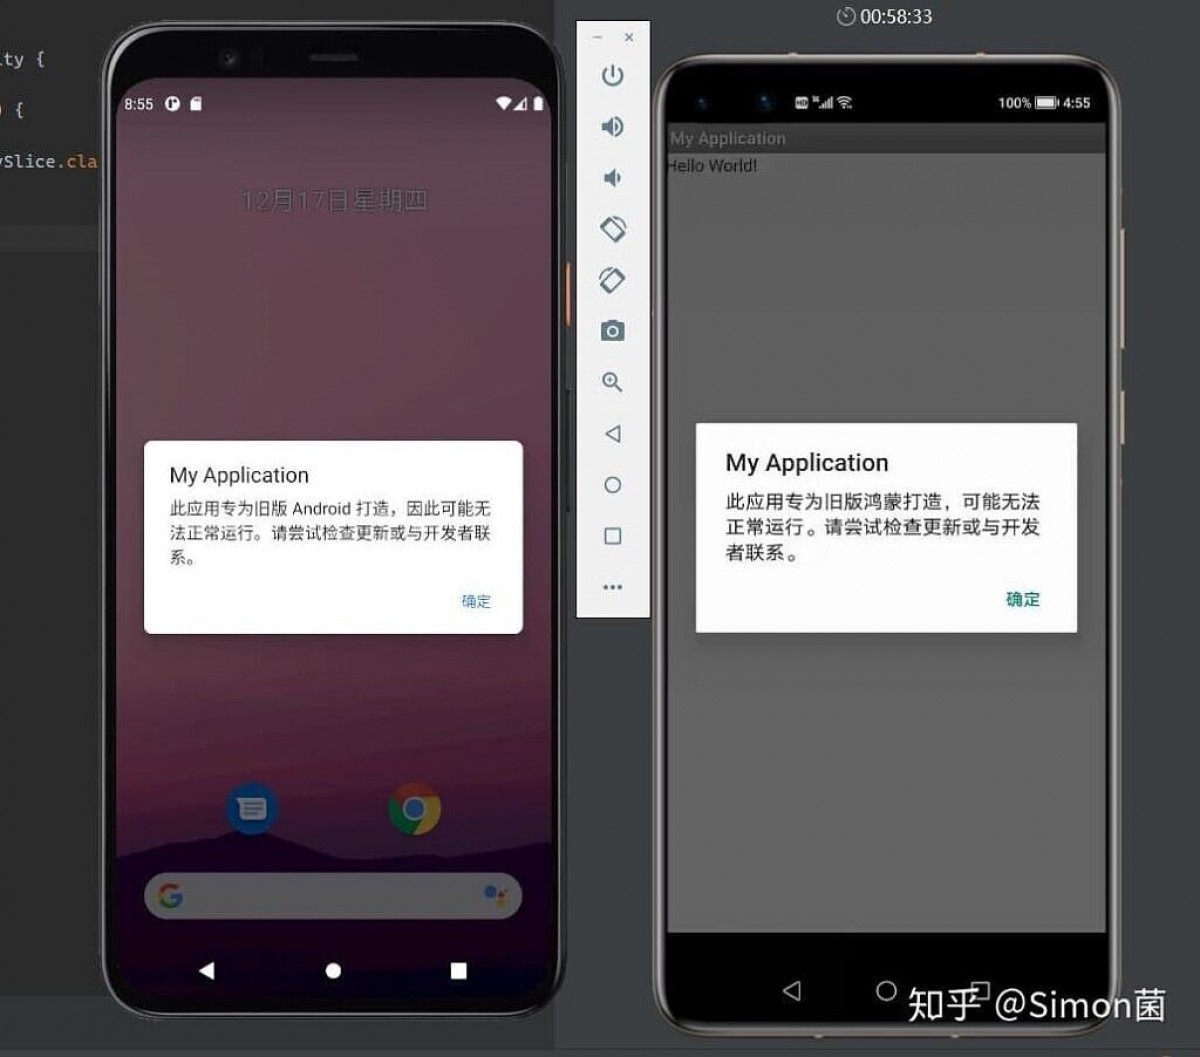 Huawei's HarmonyOS 2.0 beta is based on Android's framework